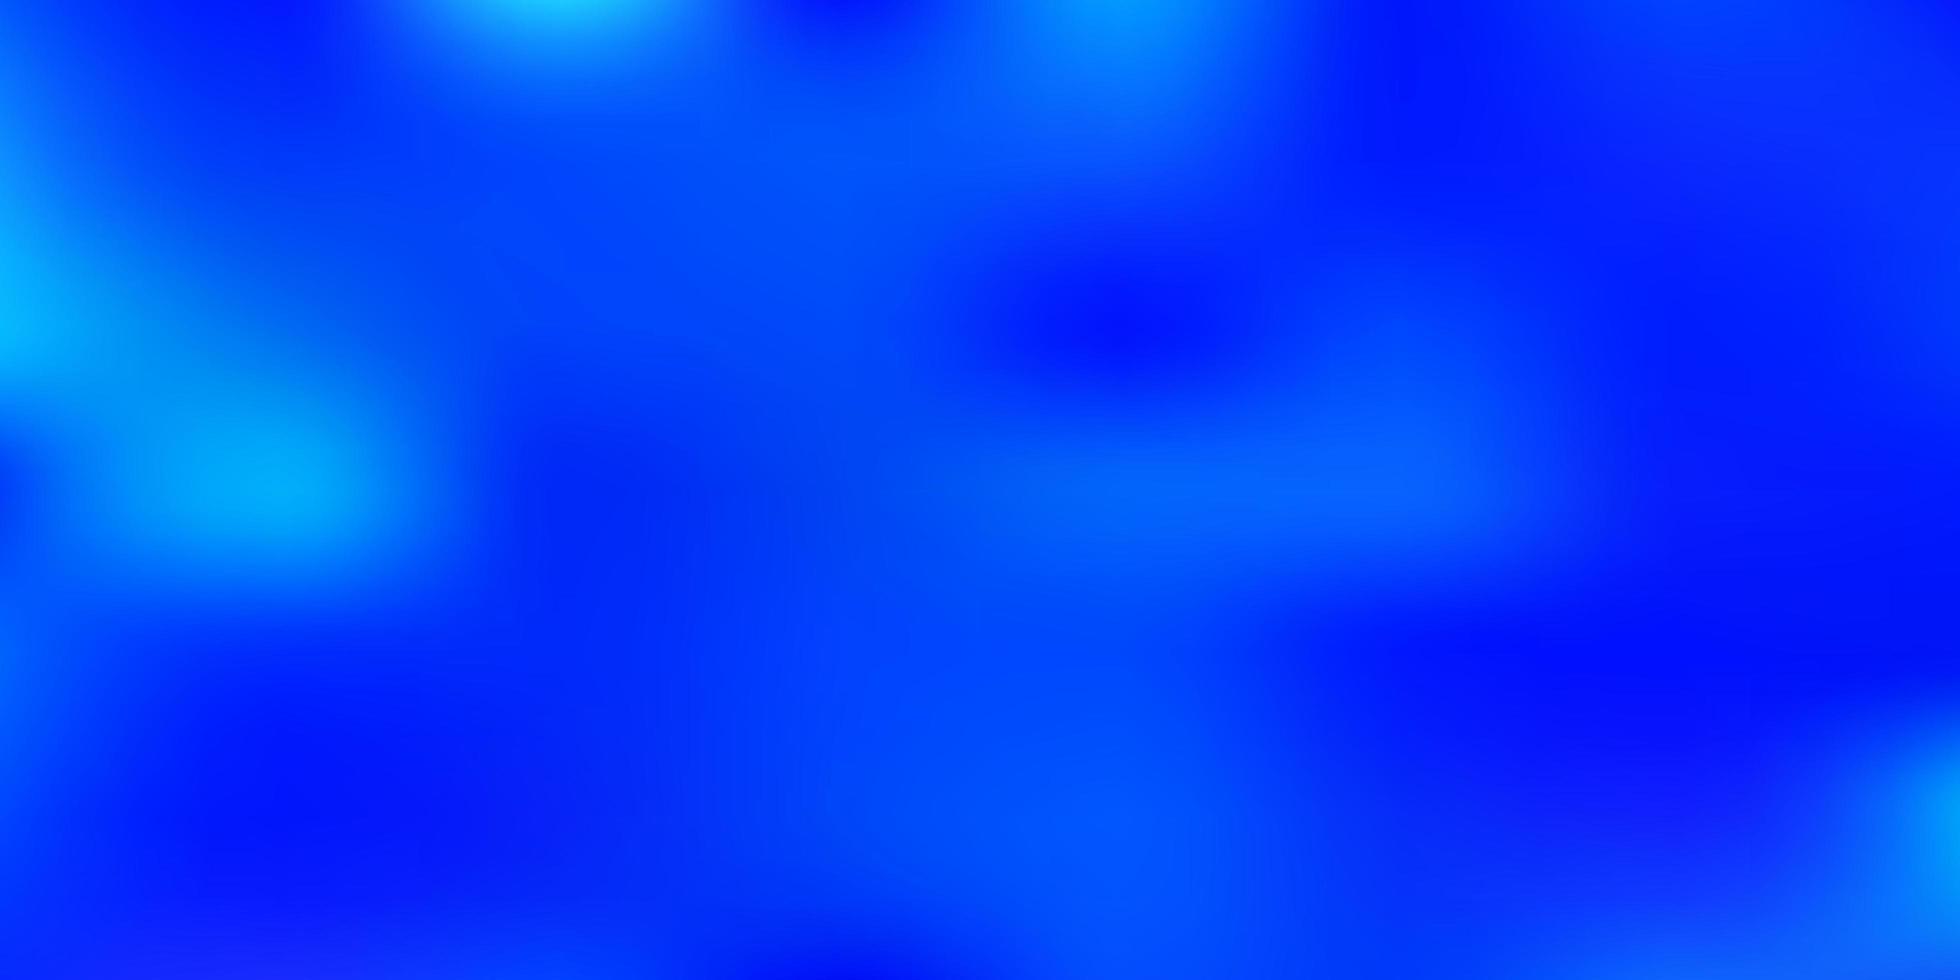 Light blue vector blurred pattern